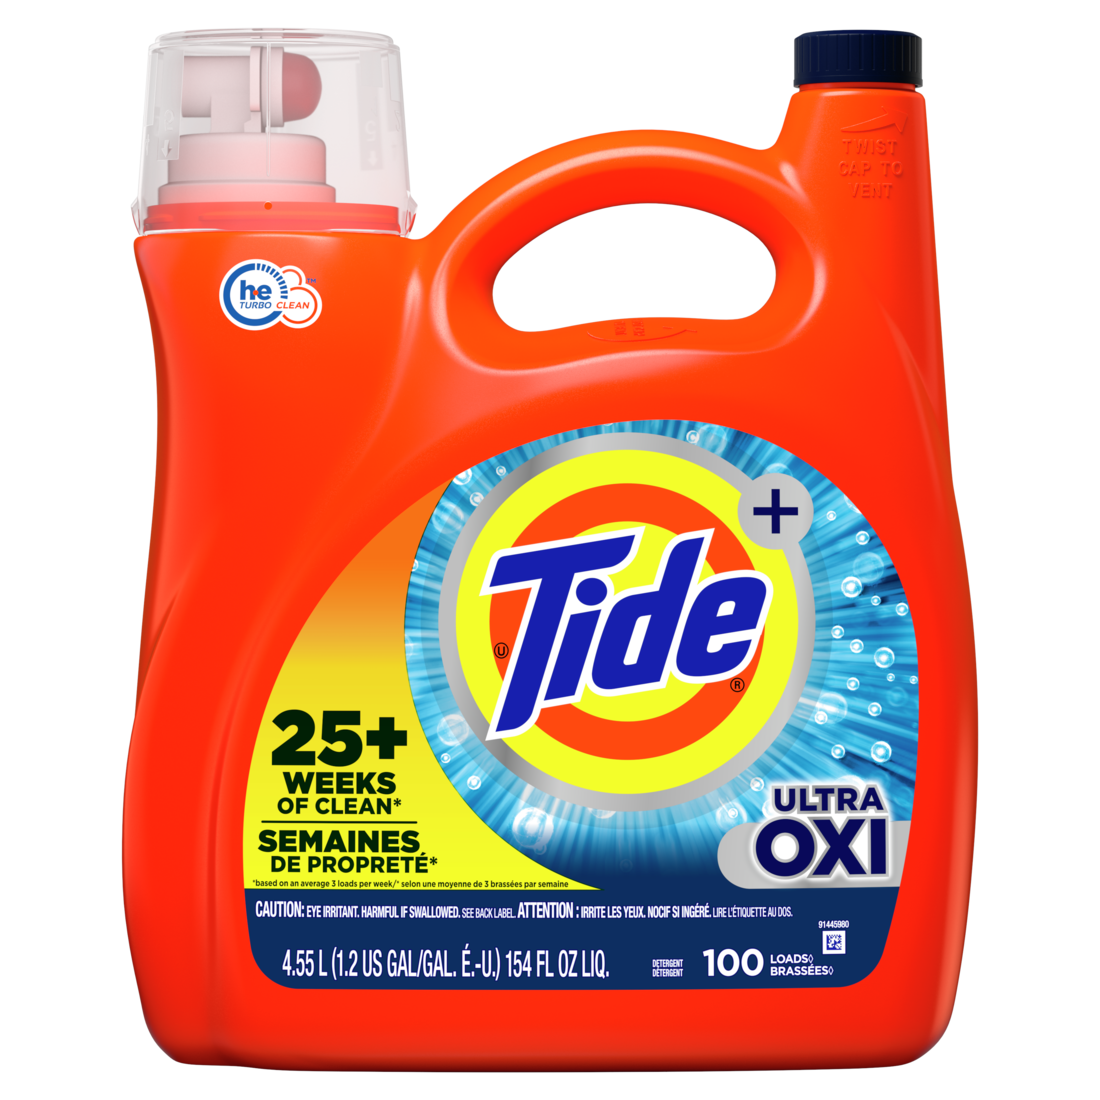 Tide Ultra Oxi Liquid Laundry Detergent 100 loads - 154oz/4pk